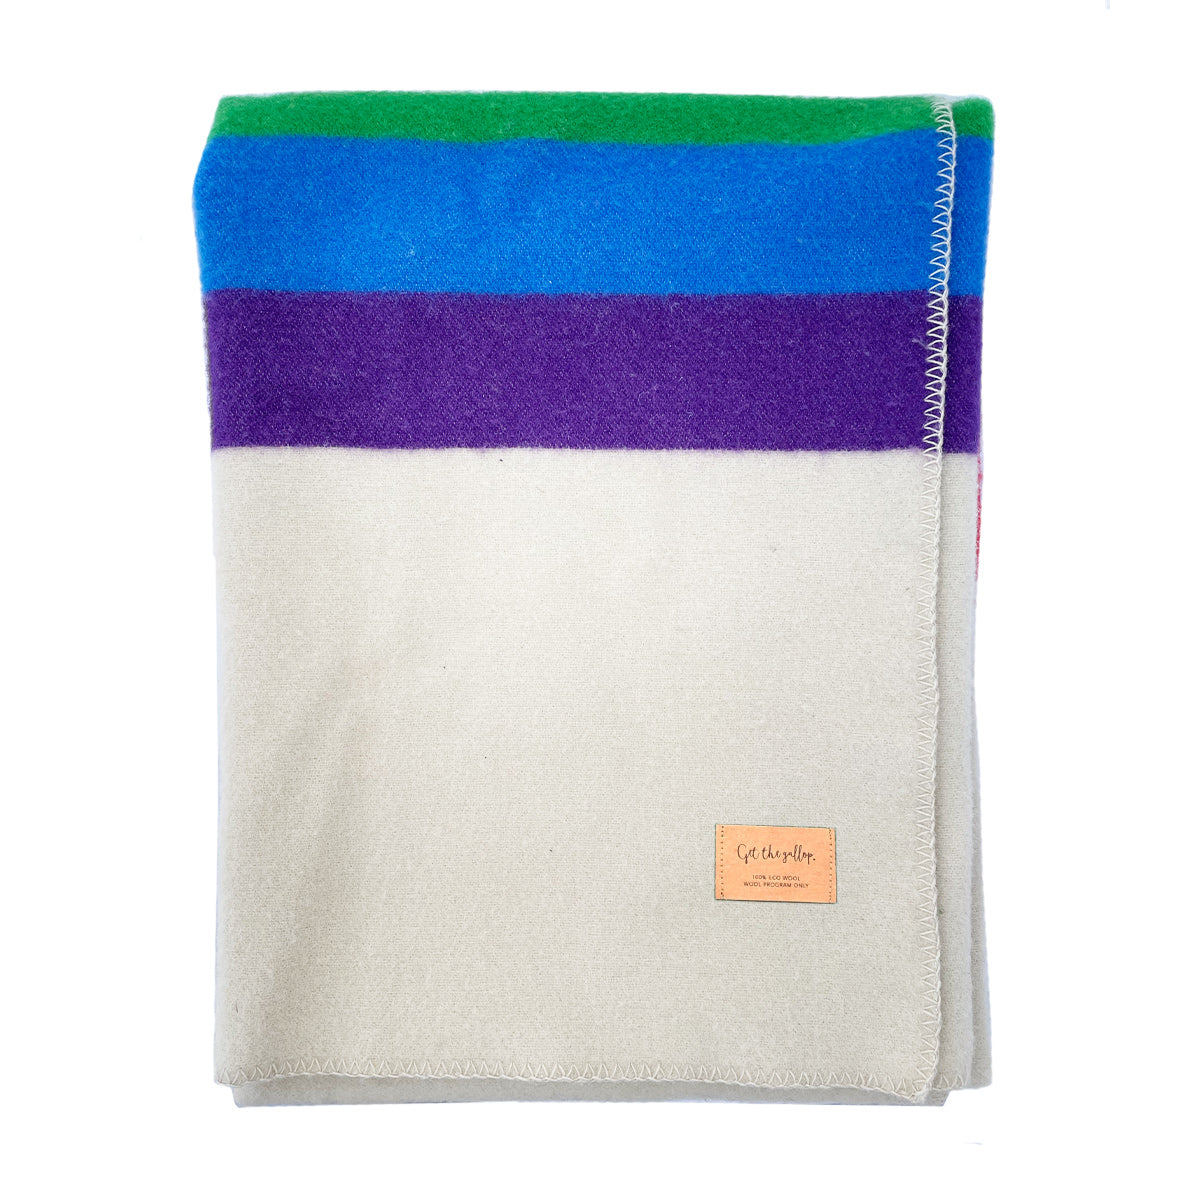 Rainbow Wool Blanket